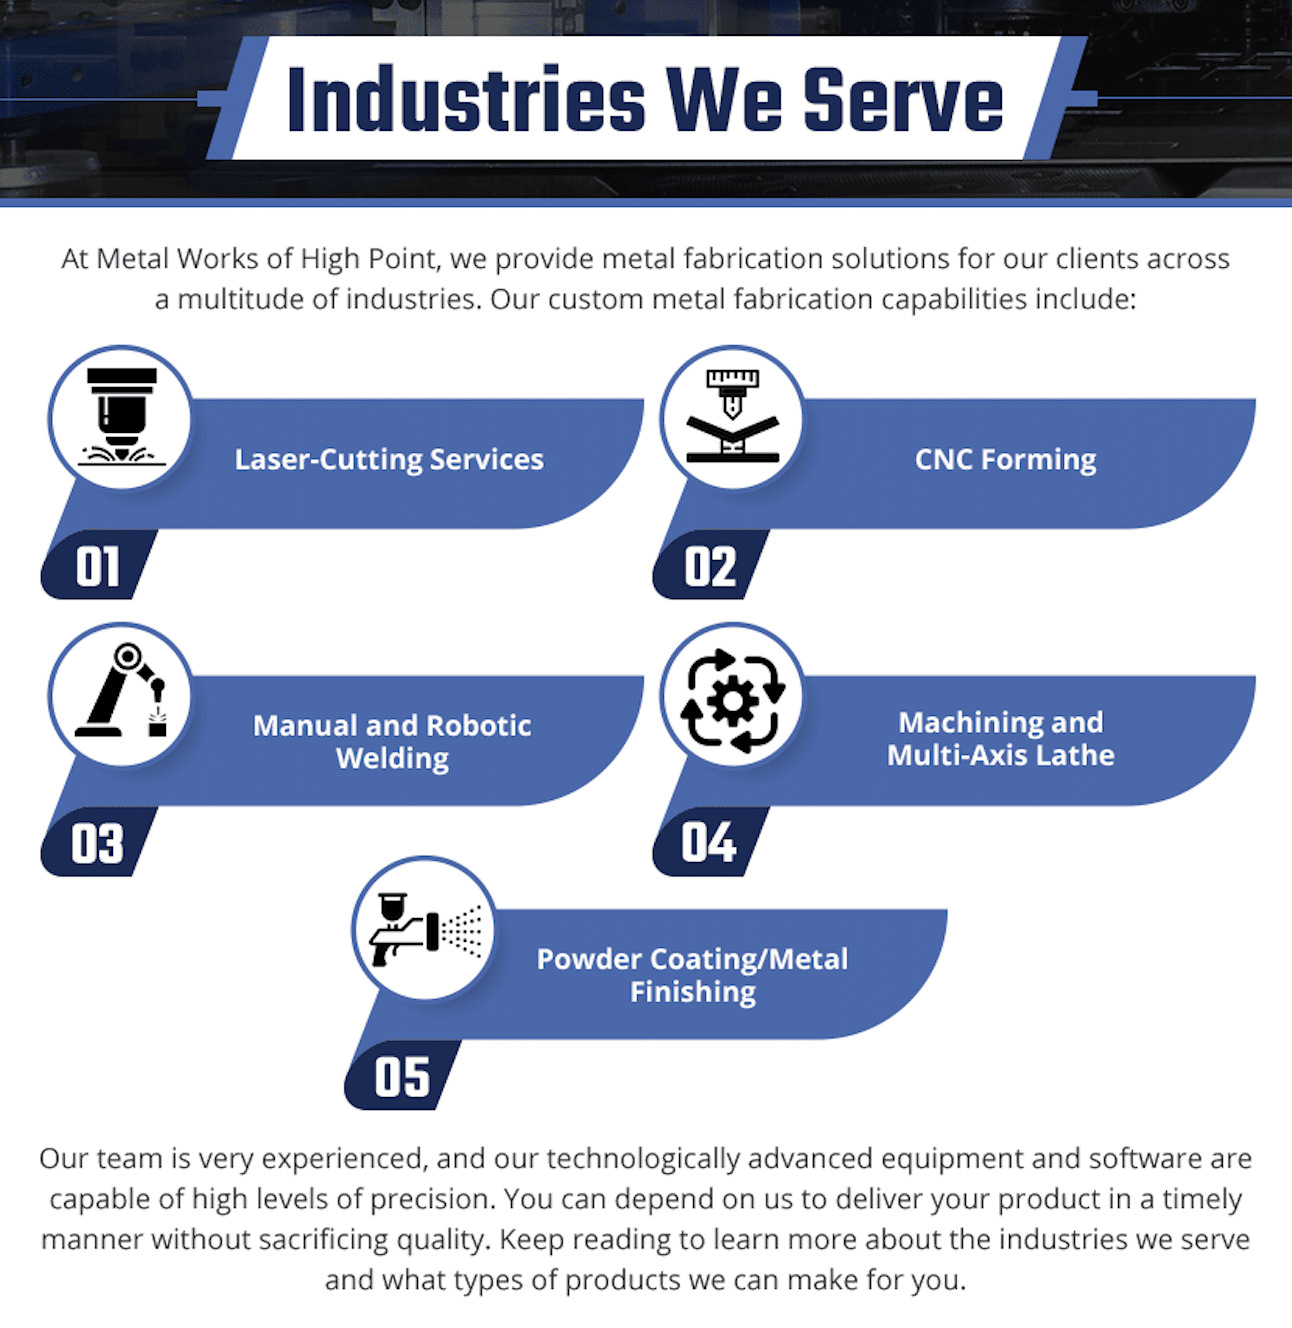 Industries We Serve infographic 1